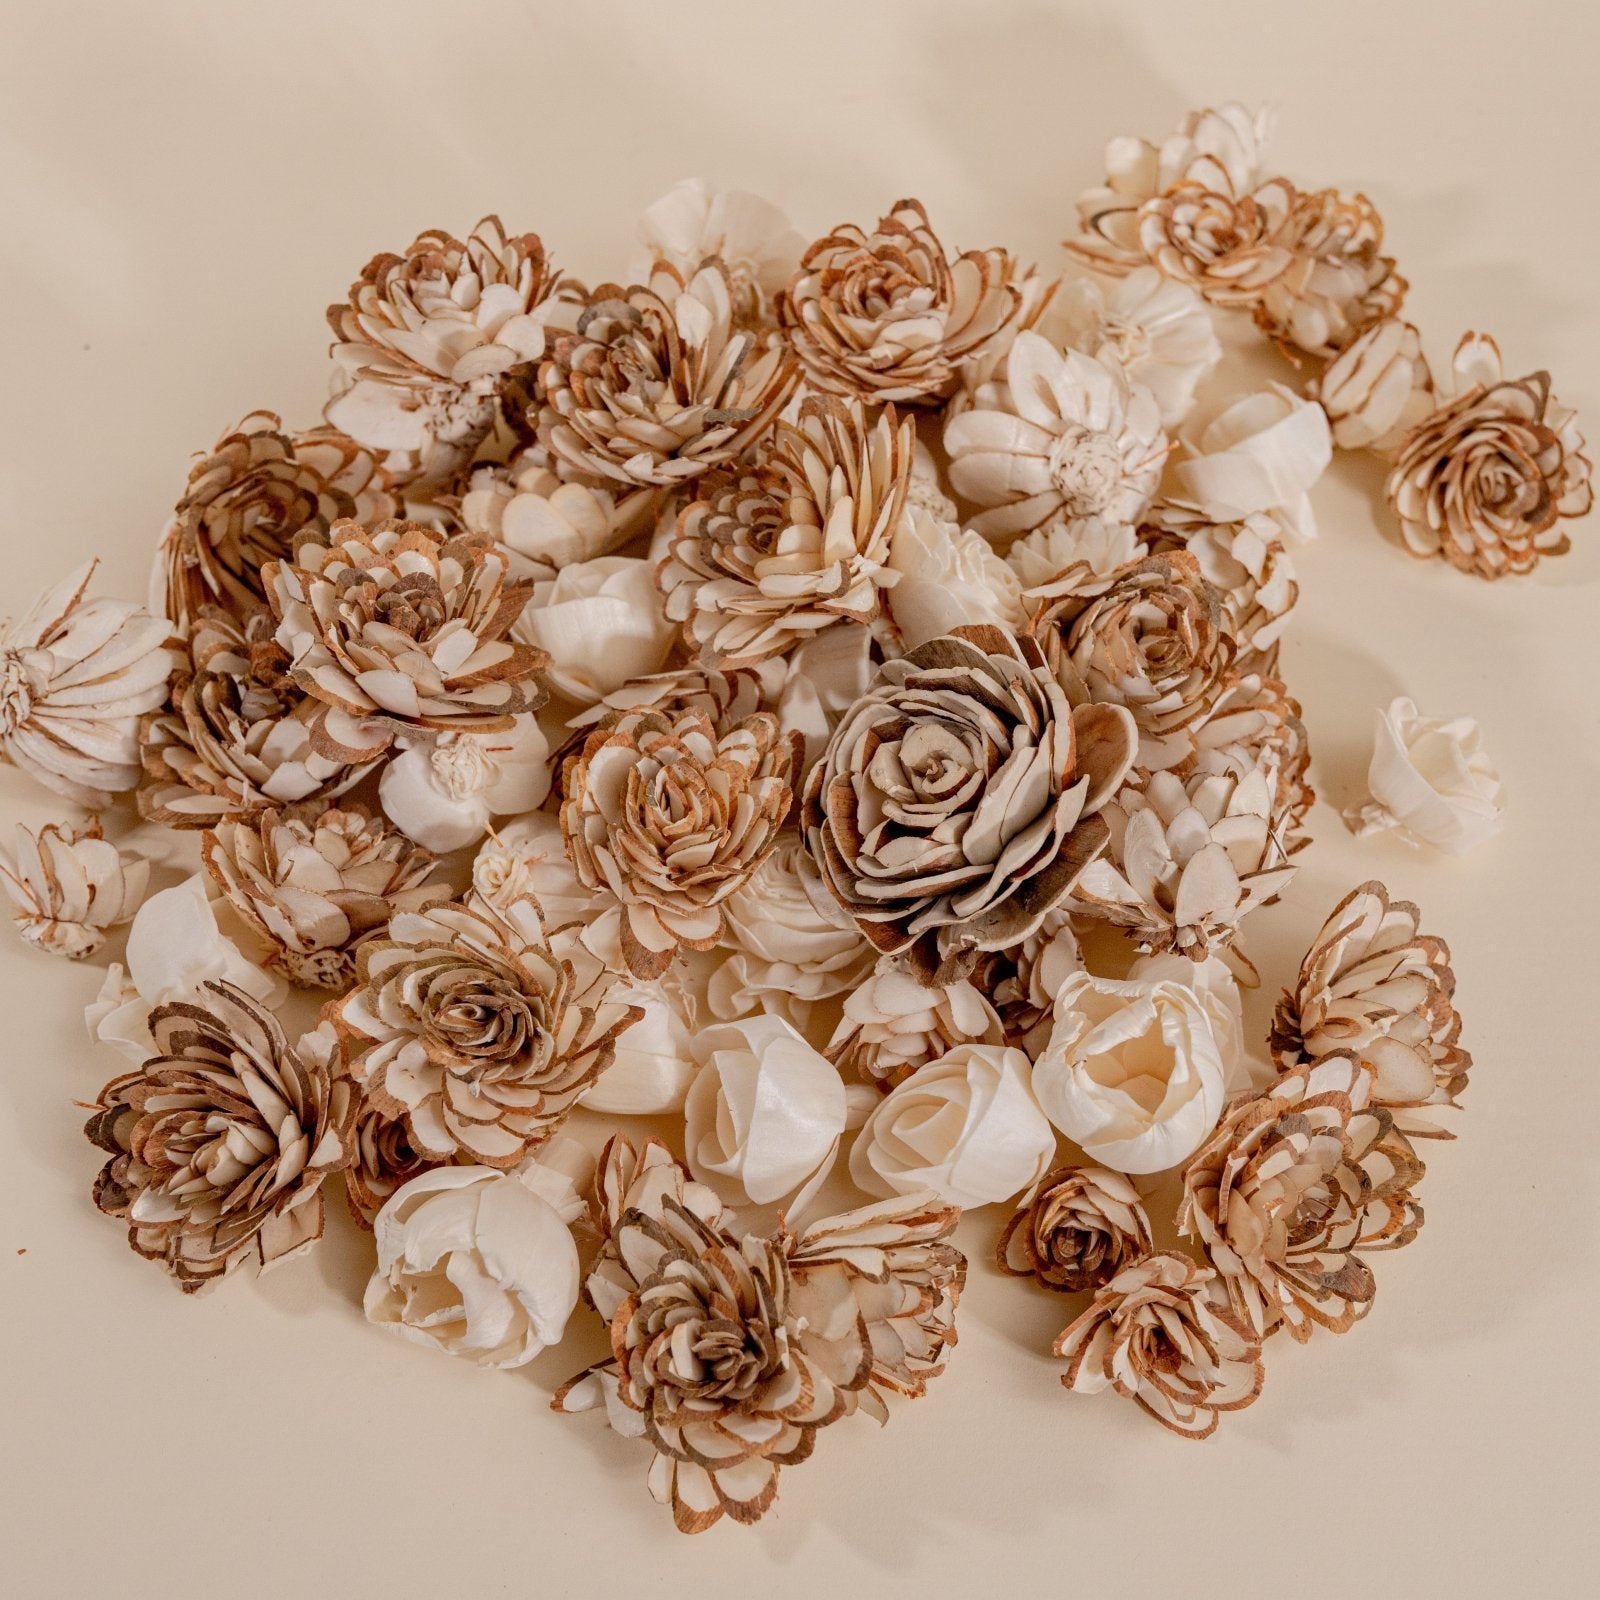 27 Baby's Breath Artificial Flowers, Gypsophila Silk Flower Stem, Vase  Flower Crown, Corsage, Wedding Flowers 4 Stems Rose Gold Blush 